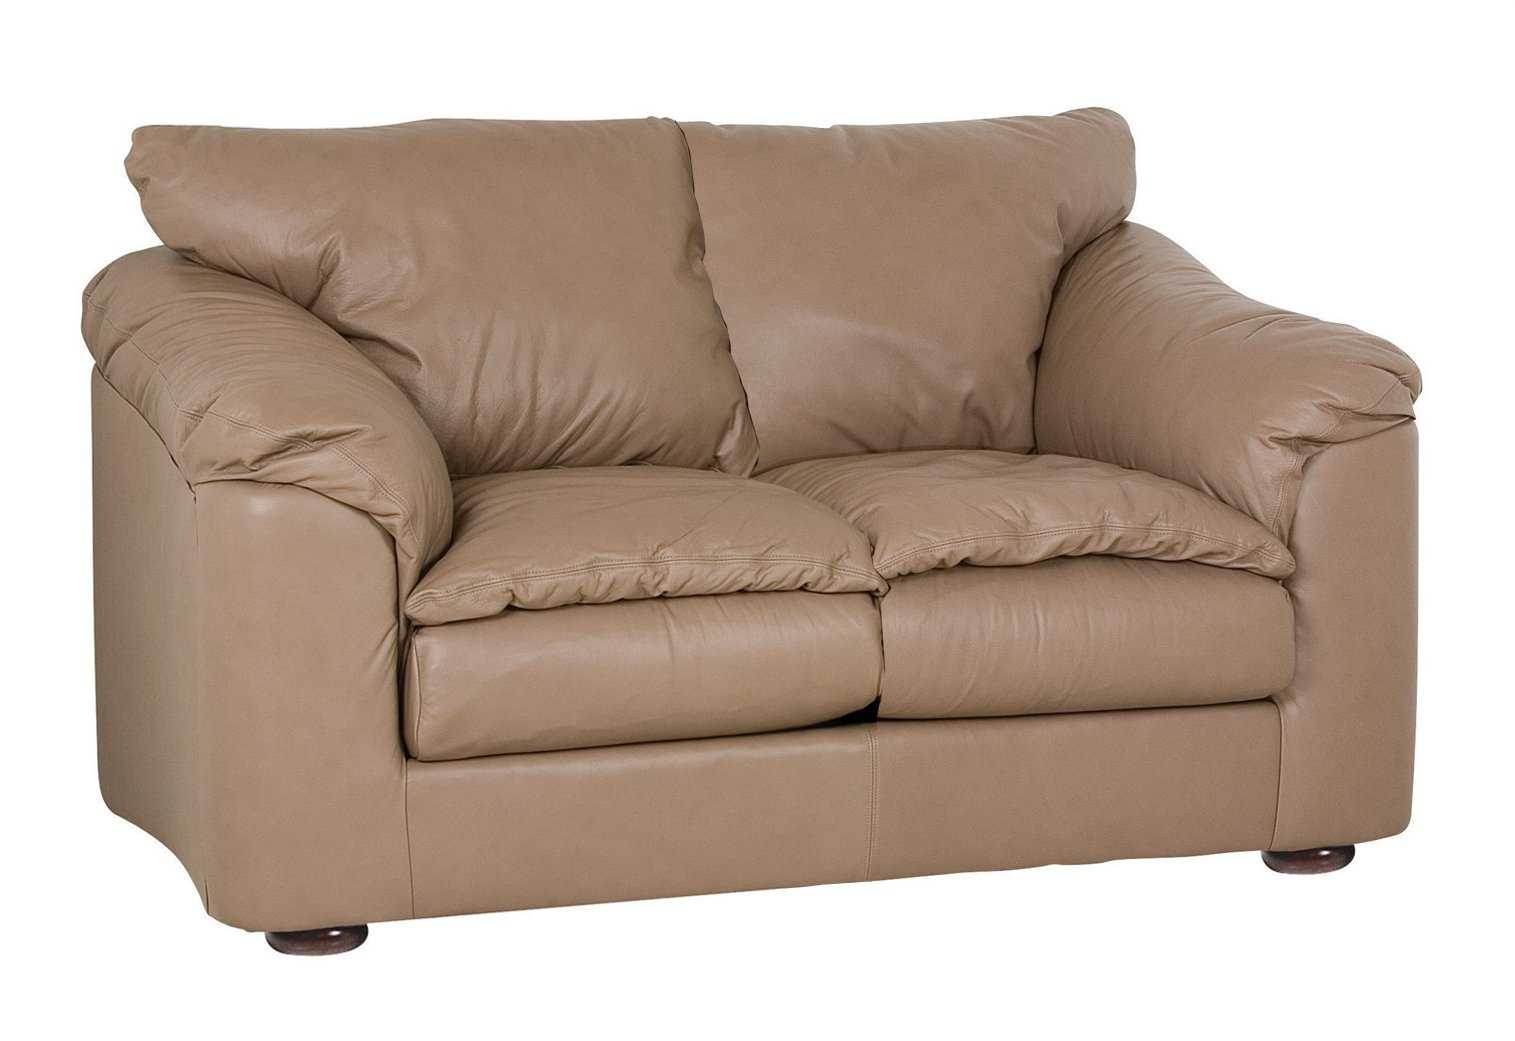 classic leather oregon sofa price